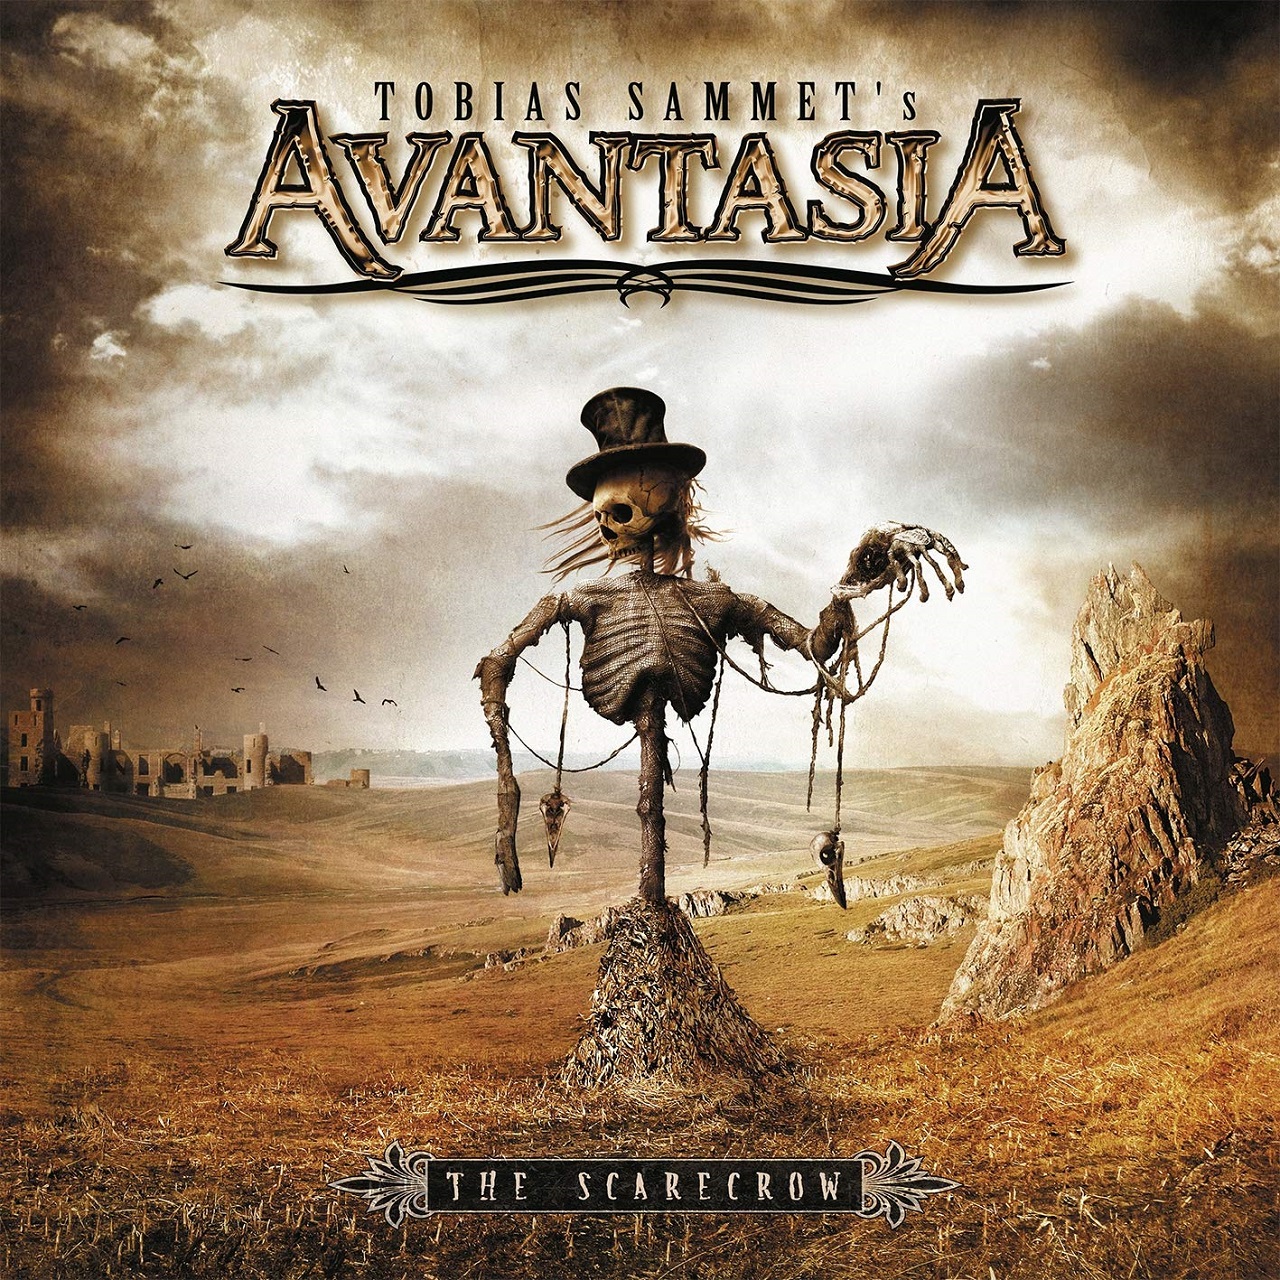 Avantasia Power Metal Music Tobias Sammet Cover Art Album Covers 1280x1280